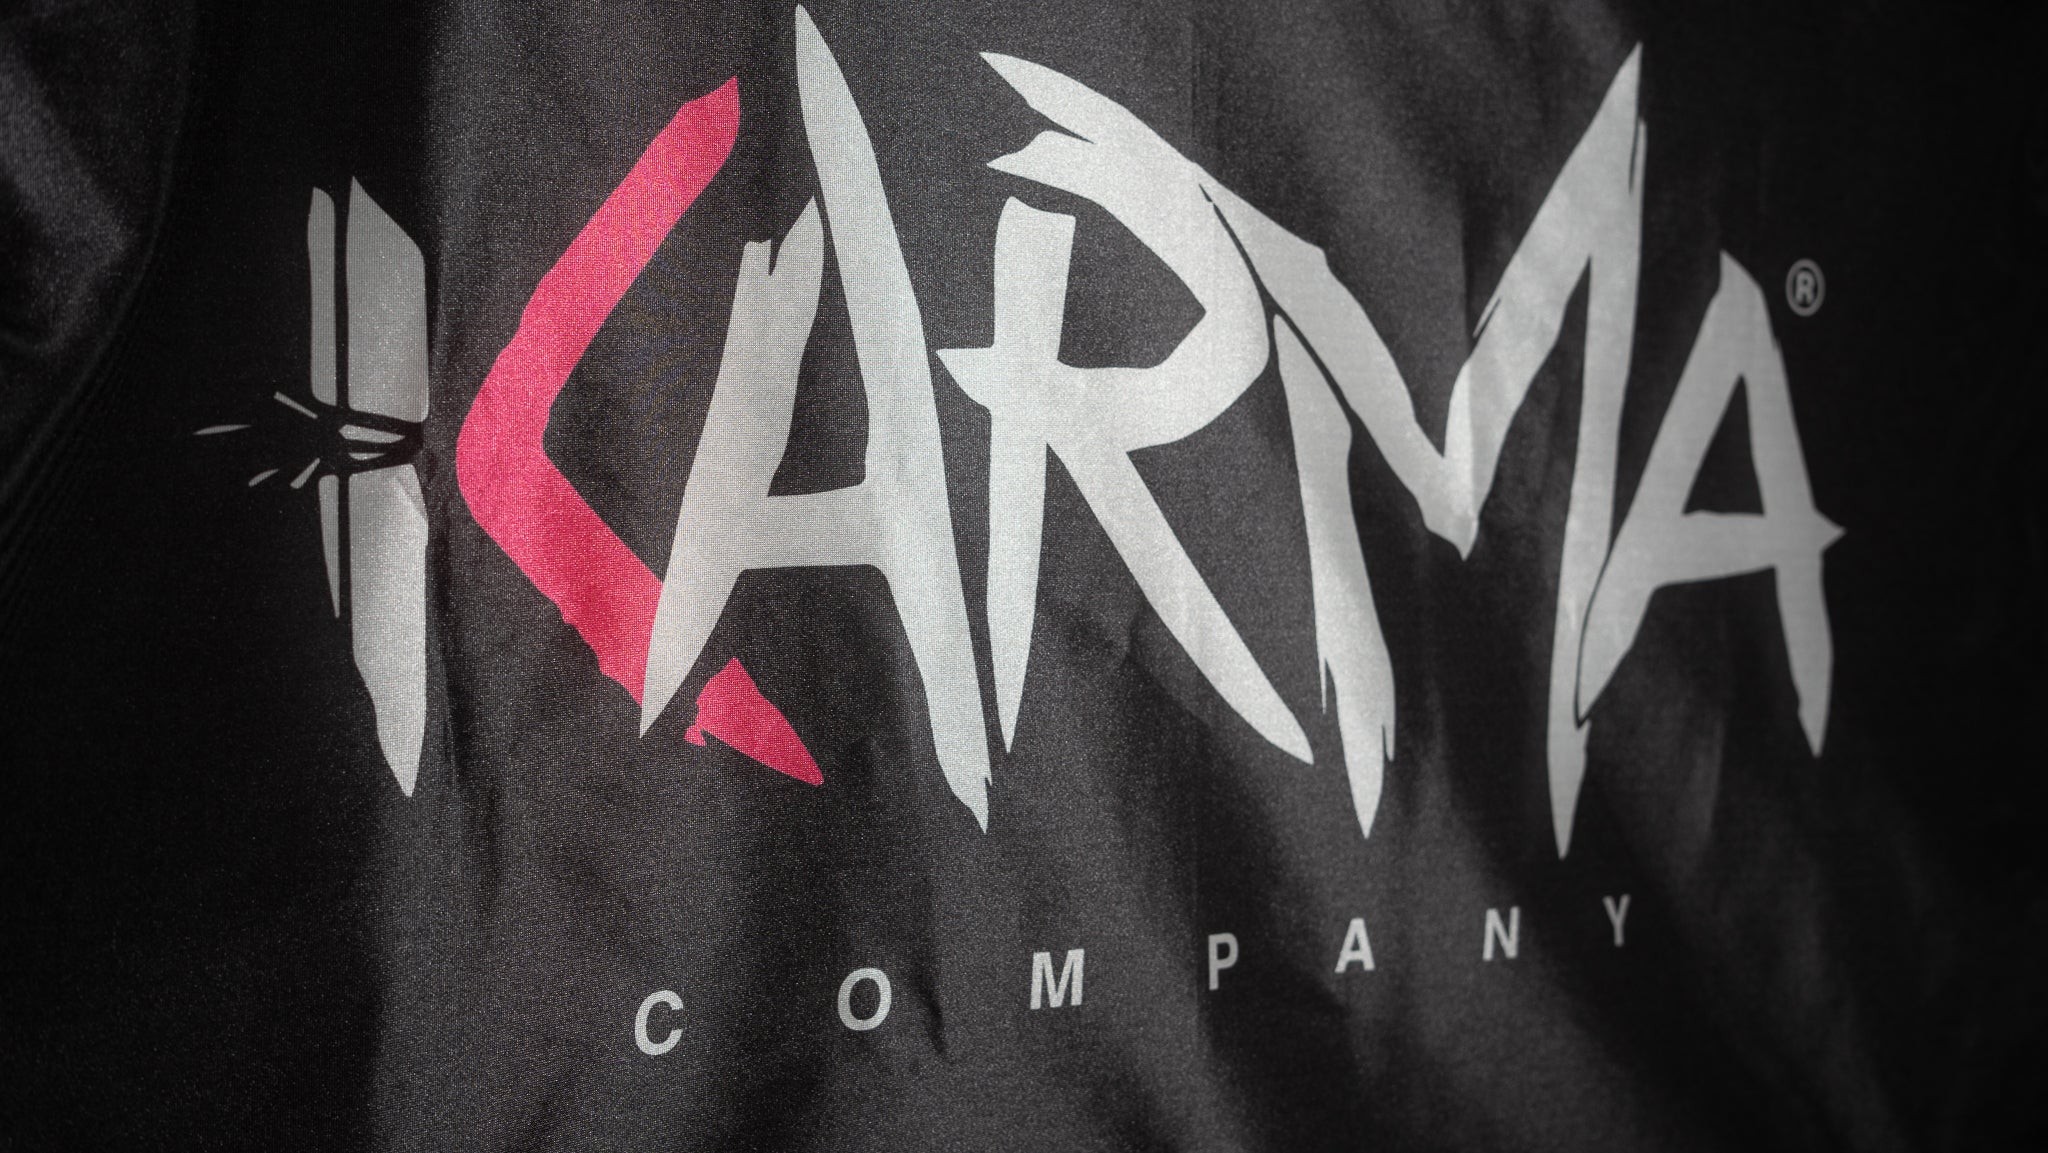 Karma Limited Edition Logo Bayrak